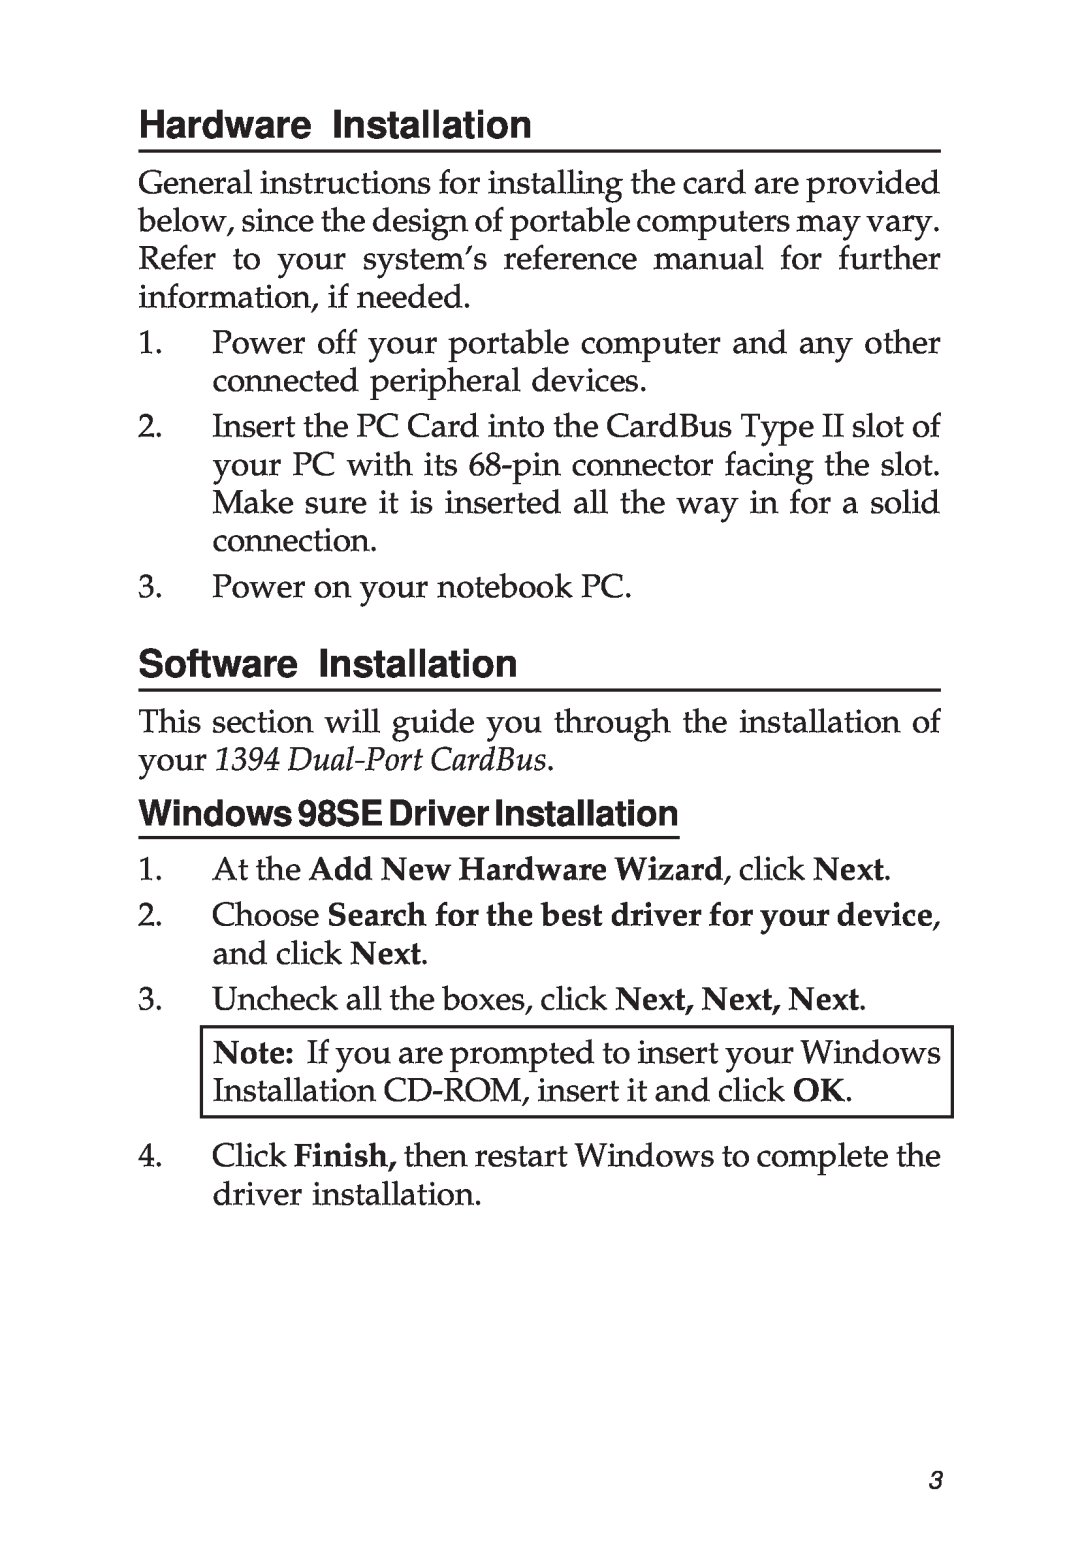 SIIG ZR, ZHLP, ZP manual Hardware Installation, Software Installation, Windows 98SE Driver Installation 